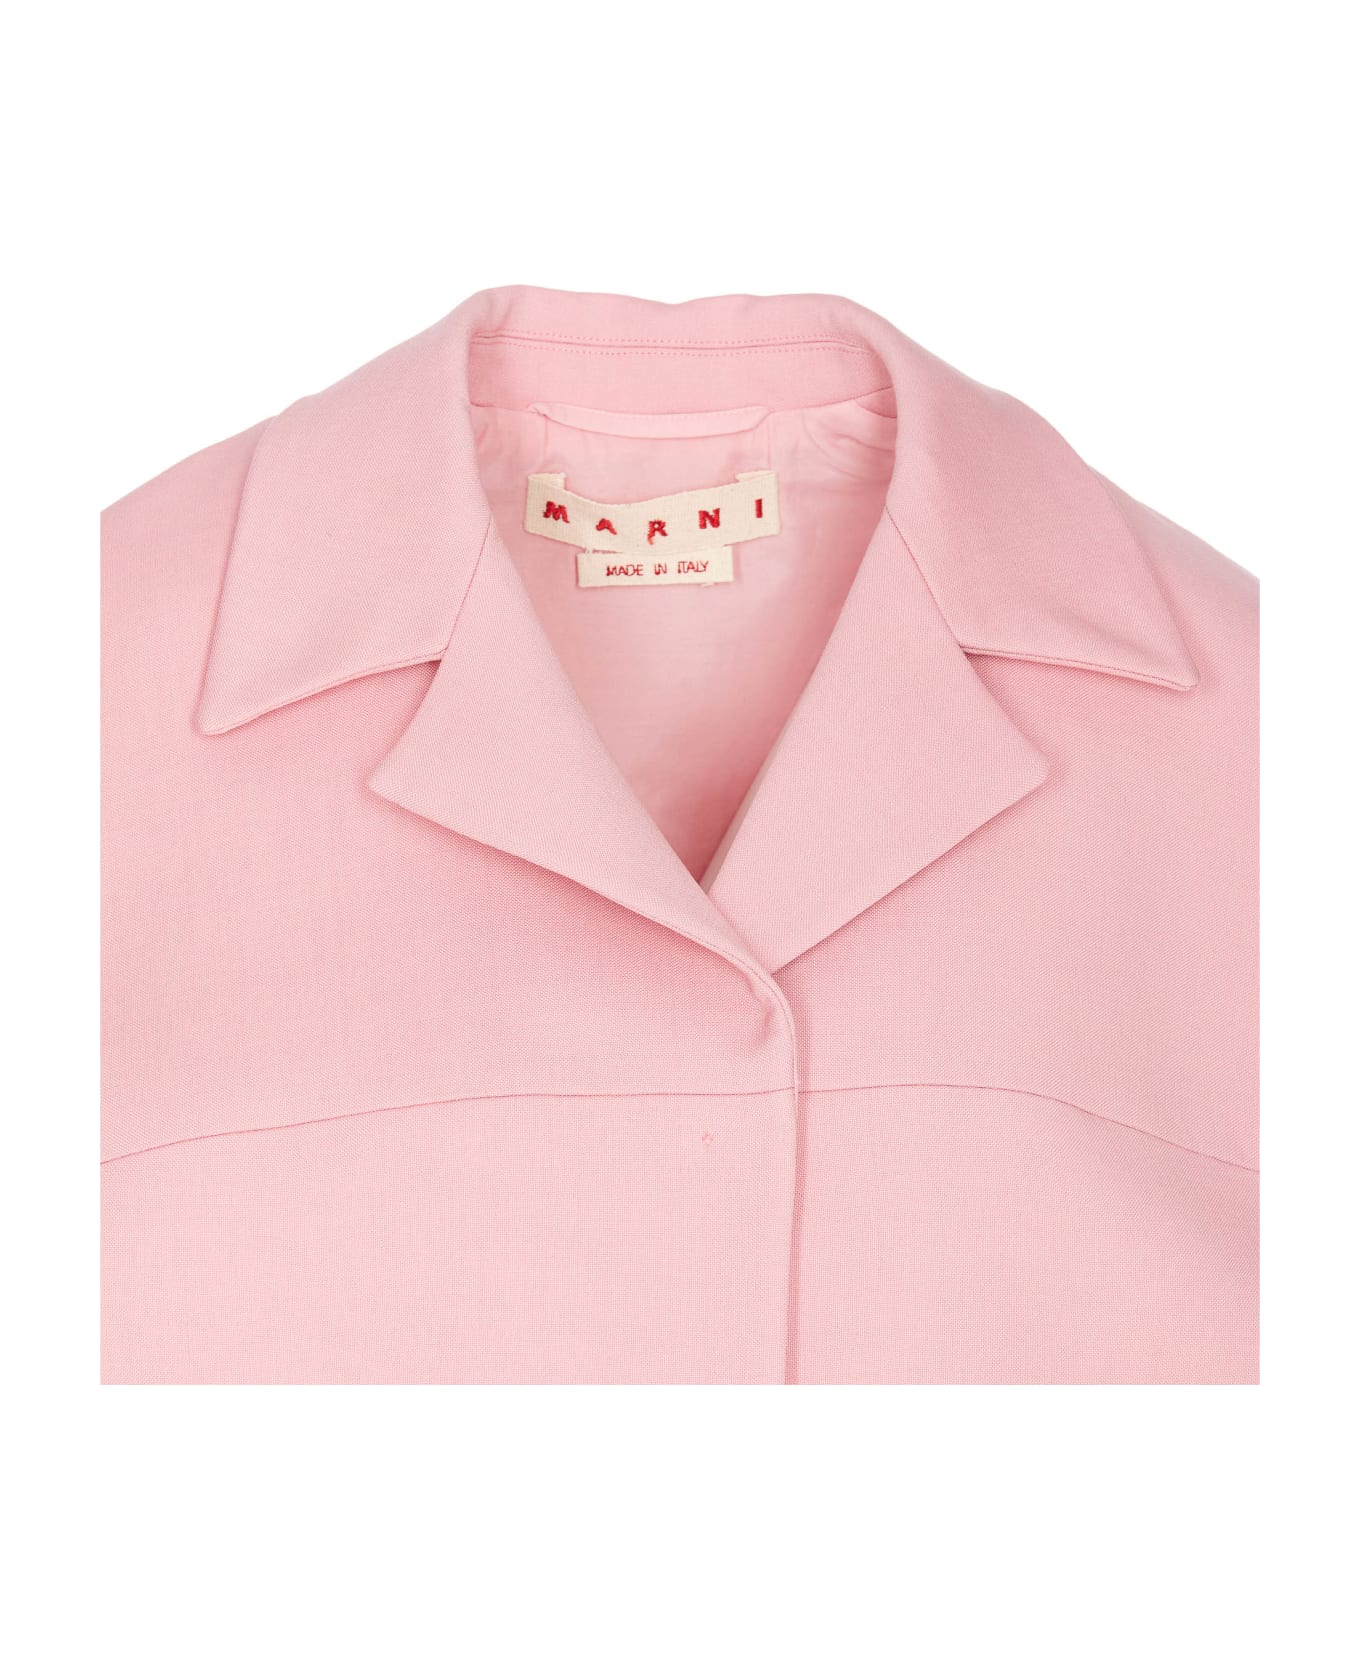 Marni Jacket - Pink ジャケット